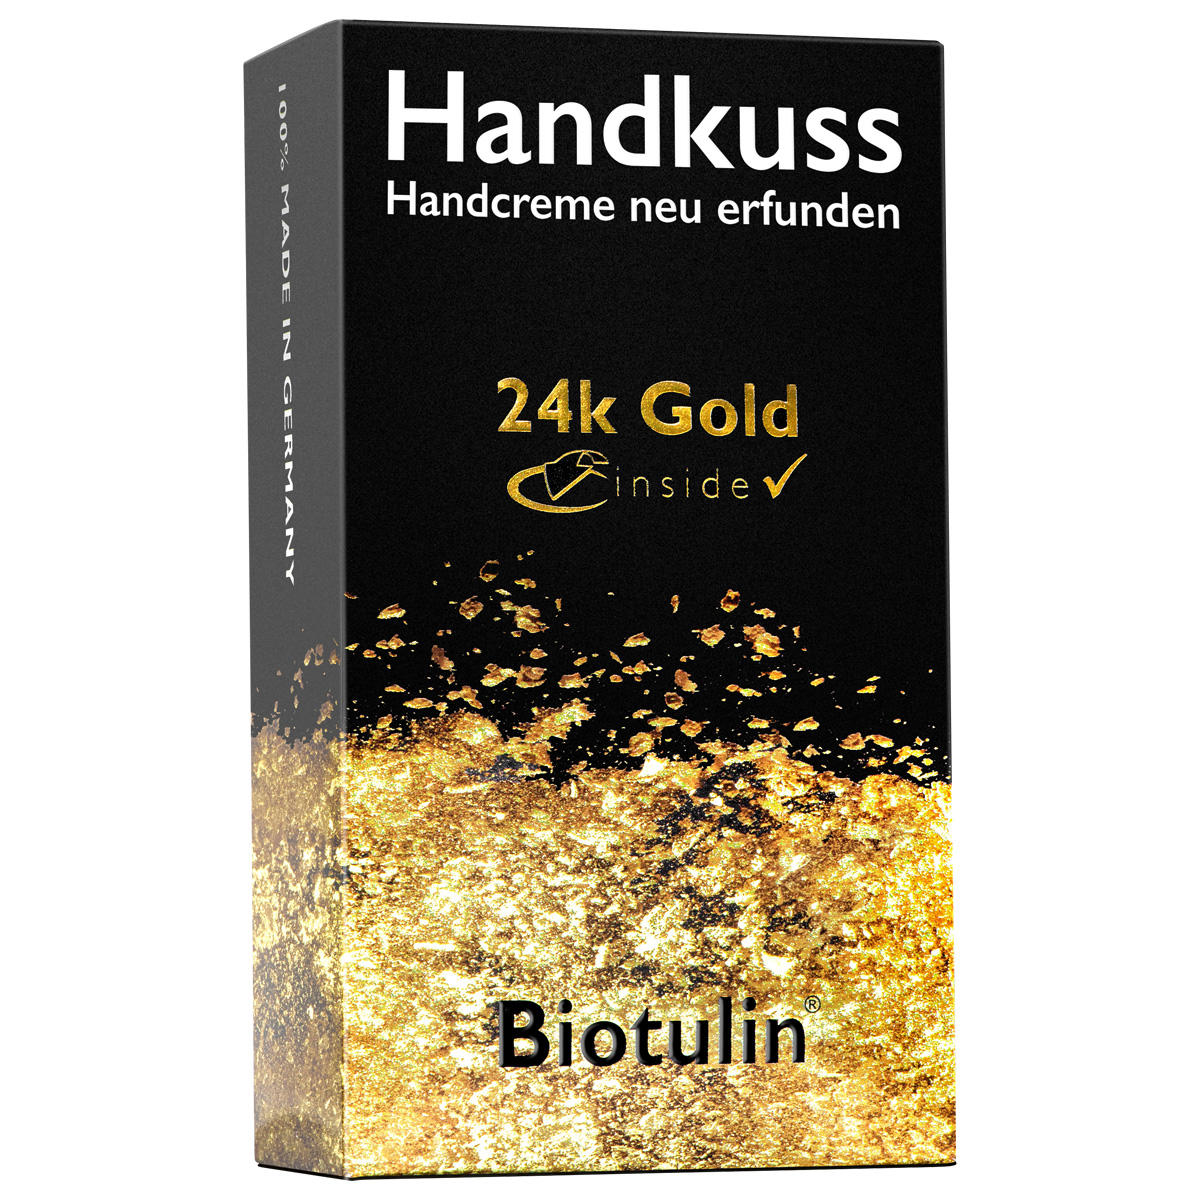 Biotulin Handkuss Handcreme 50 ml - 2